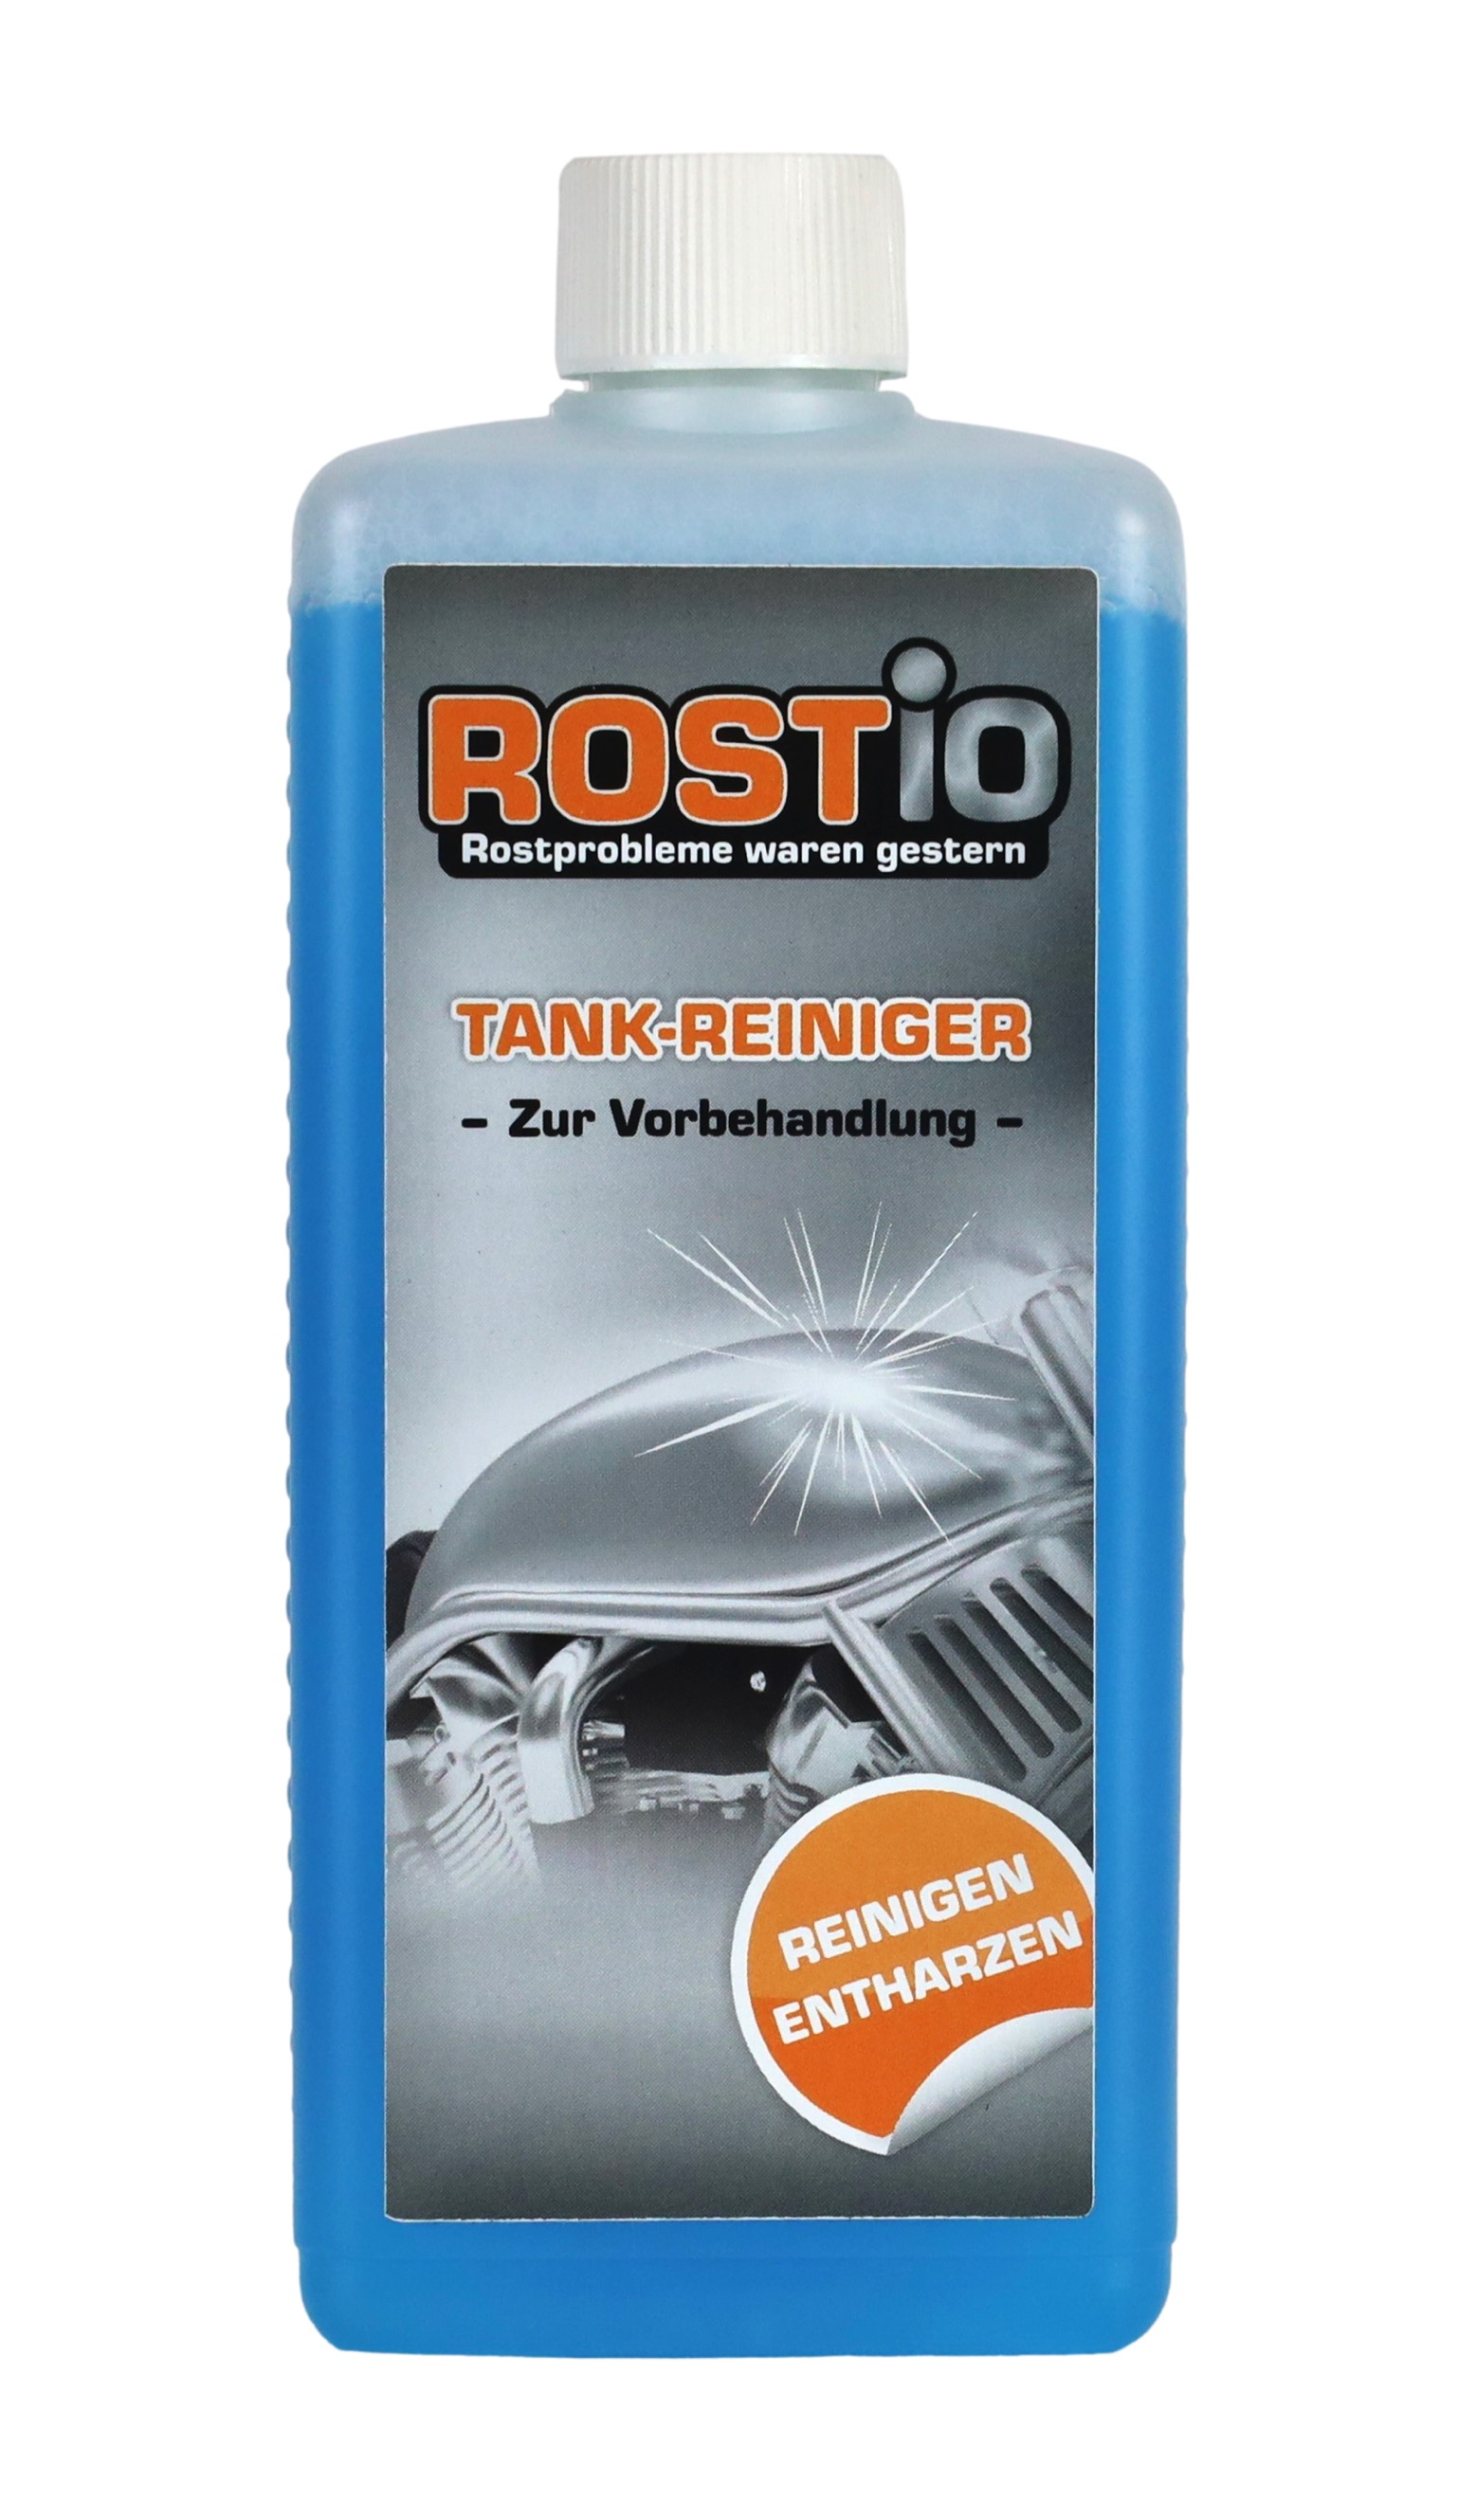 ROSTIO Tankreiniger 500ml Entharzer, ROSTIO Tankentroster, Tankentrostung